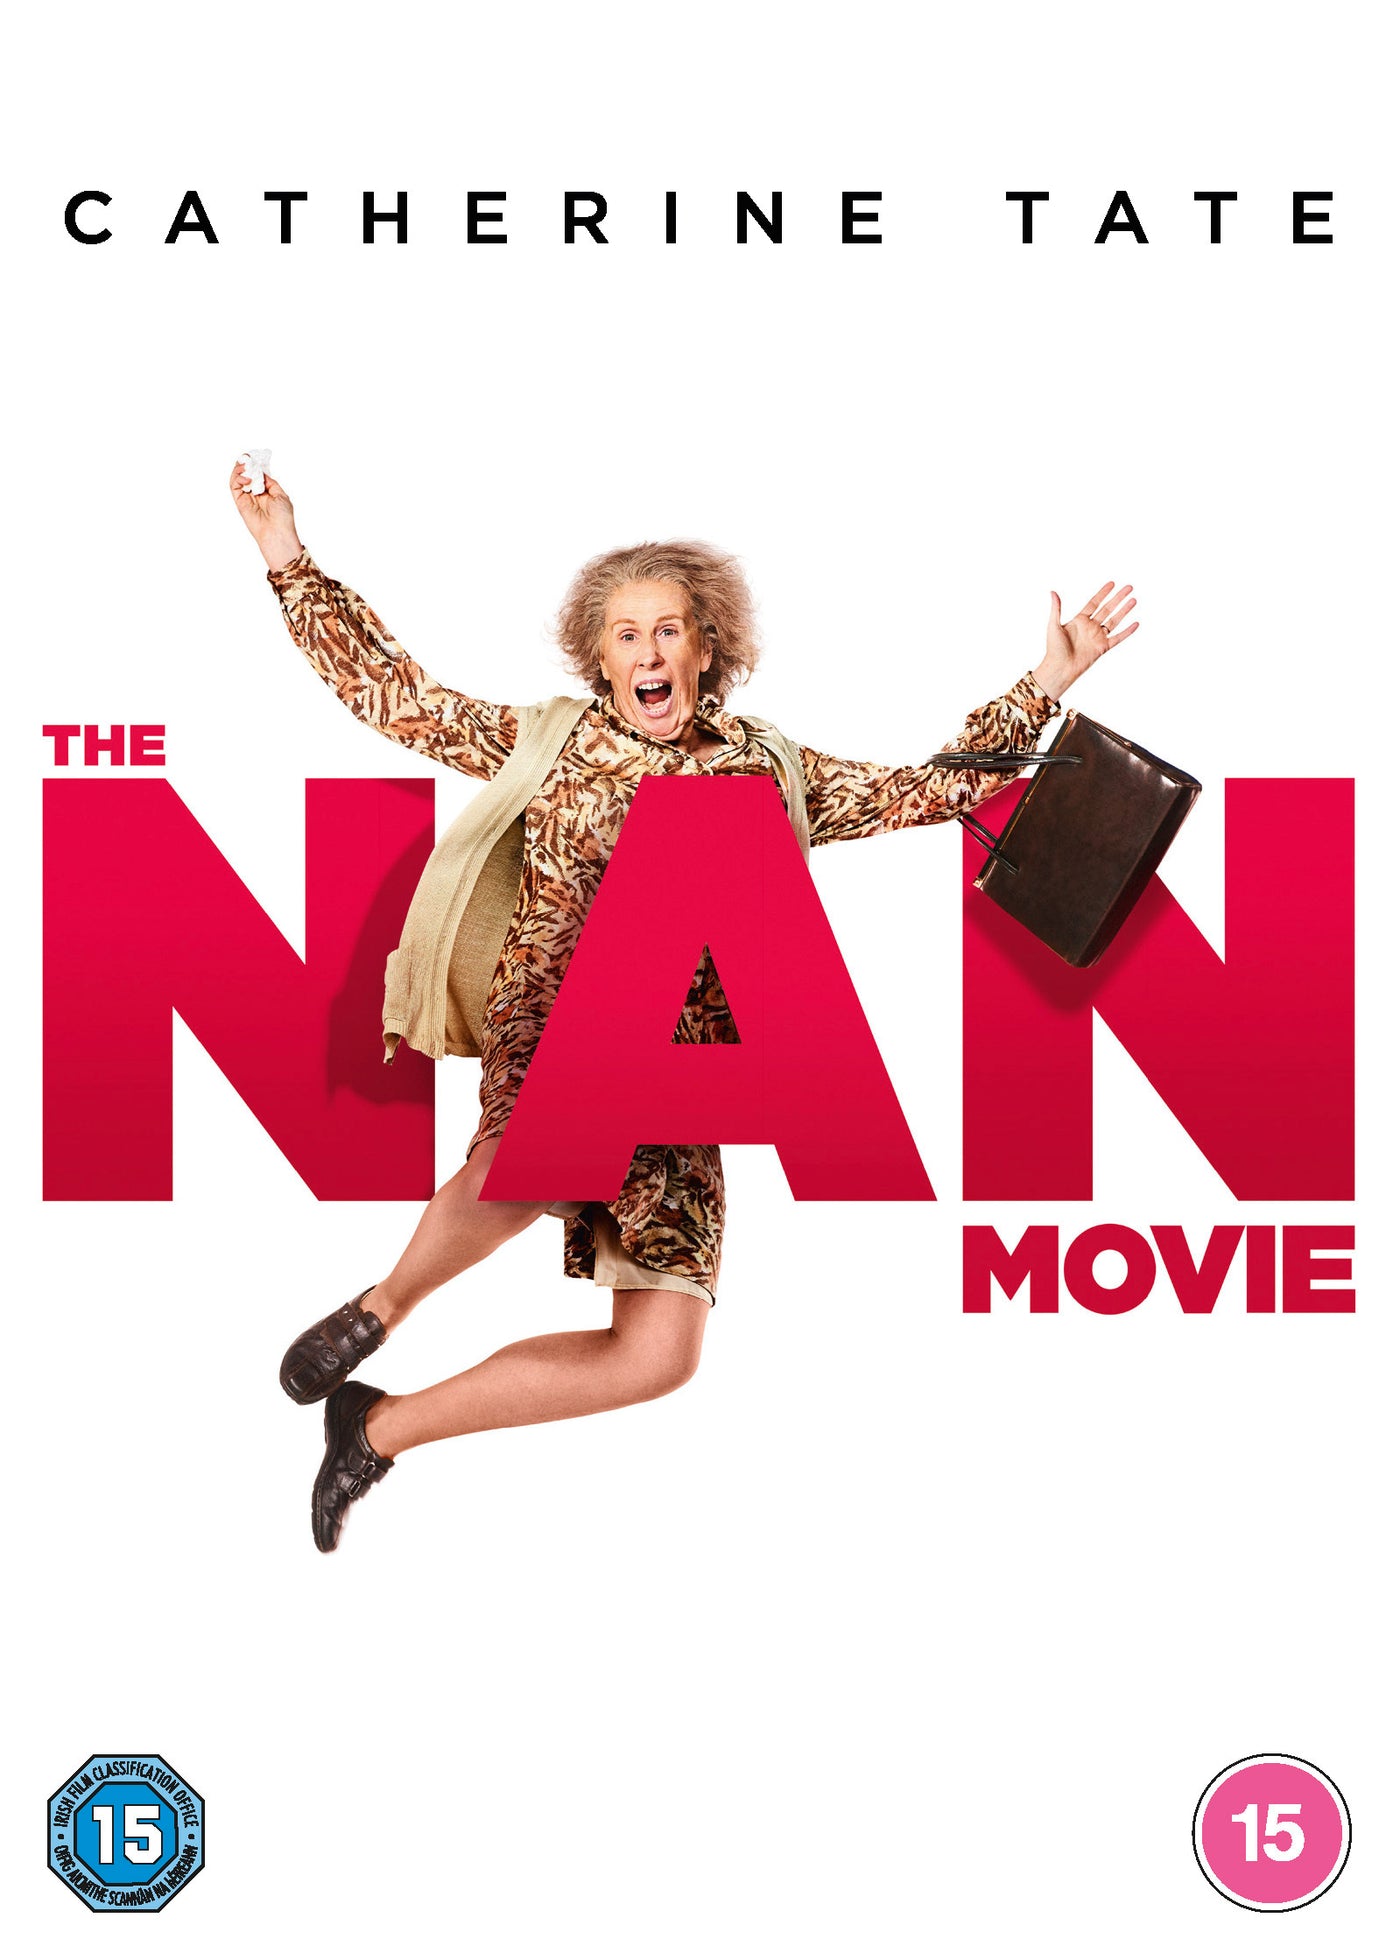 The Nan Movie (DVD)